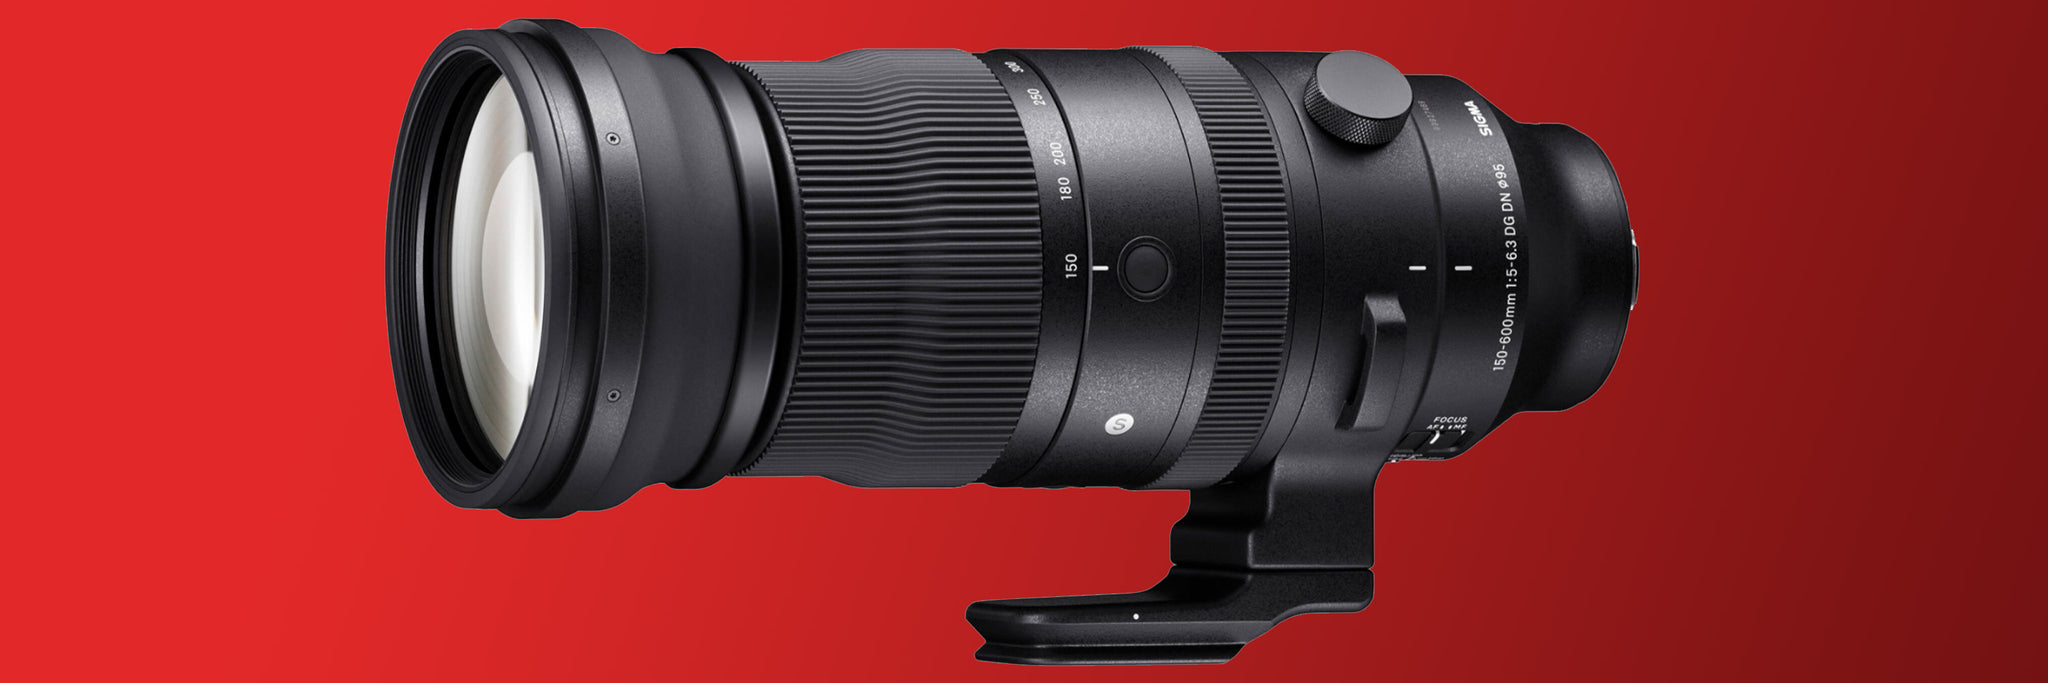 Sigma 150-600mm f_5-6.3 DG OS HSM Lens Sport